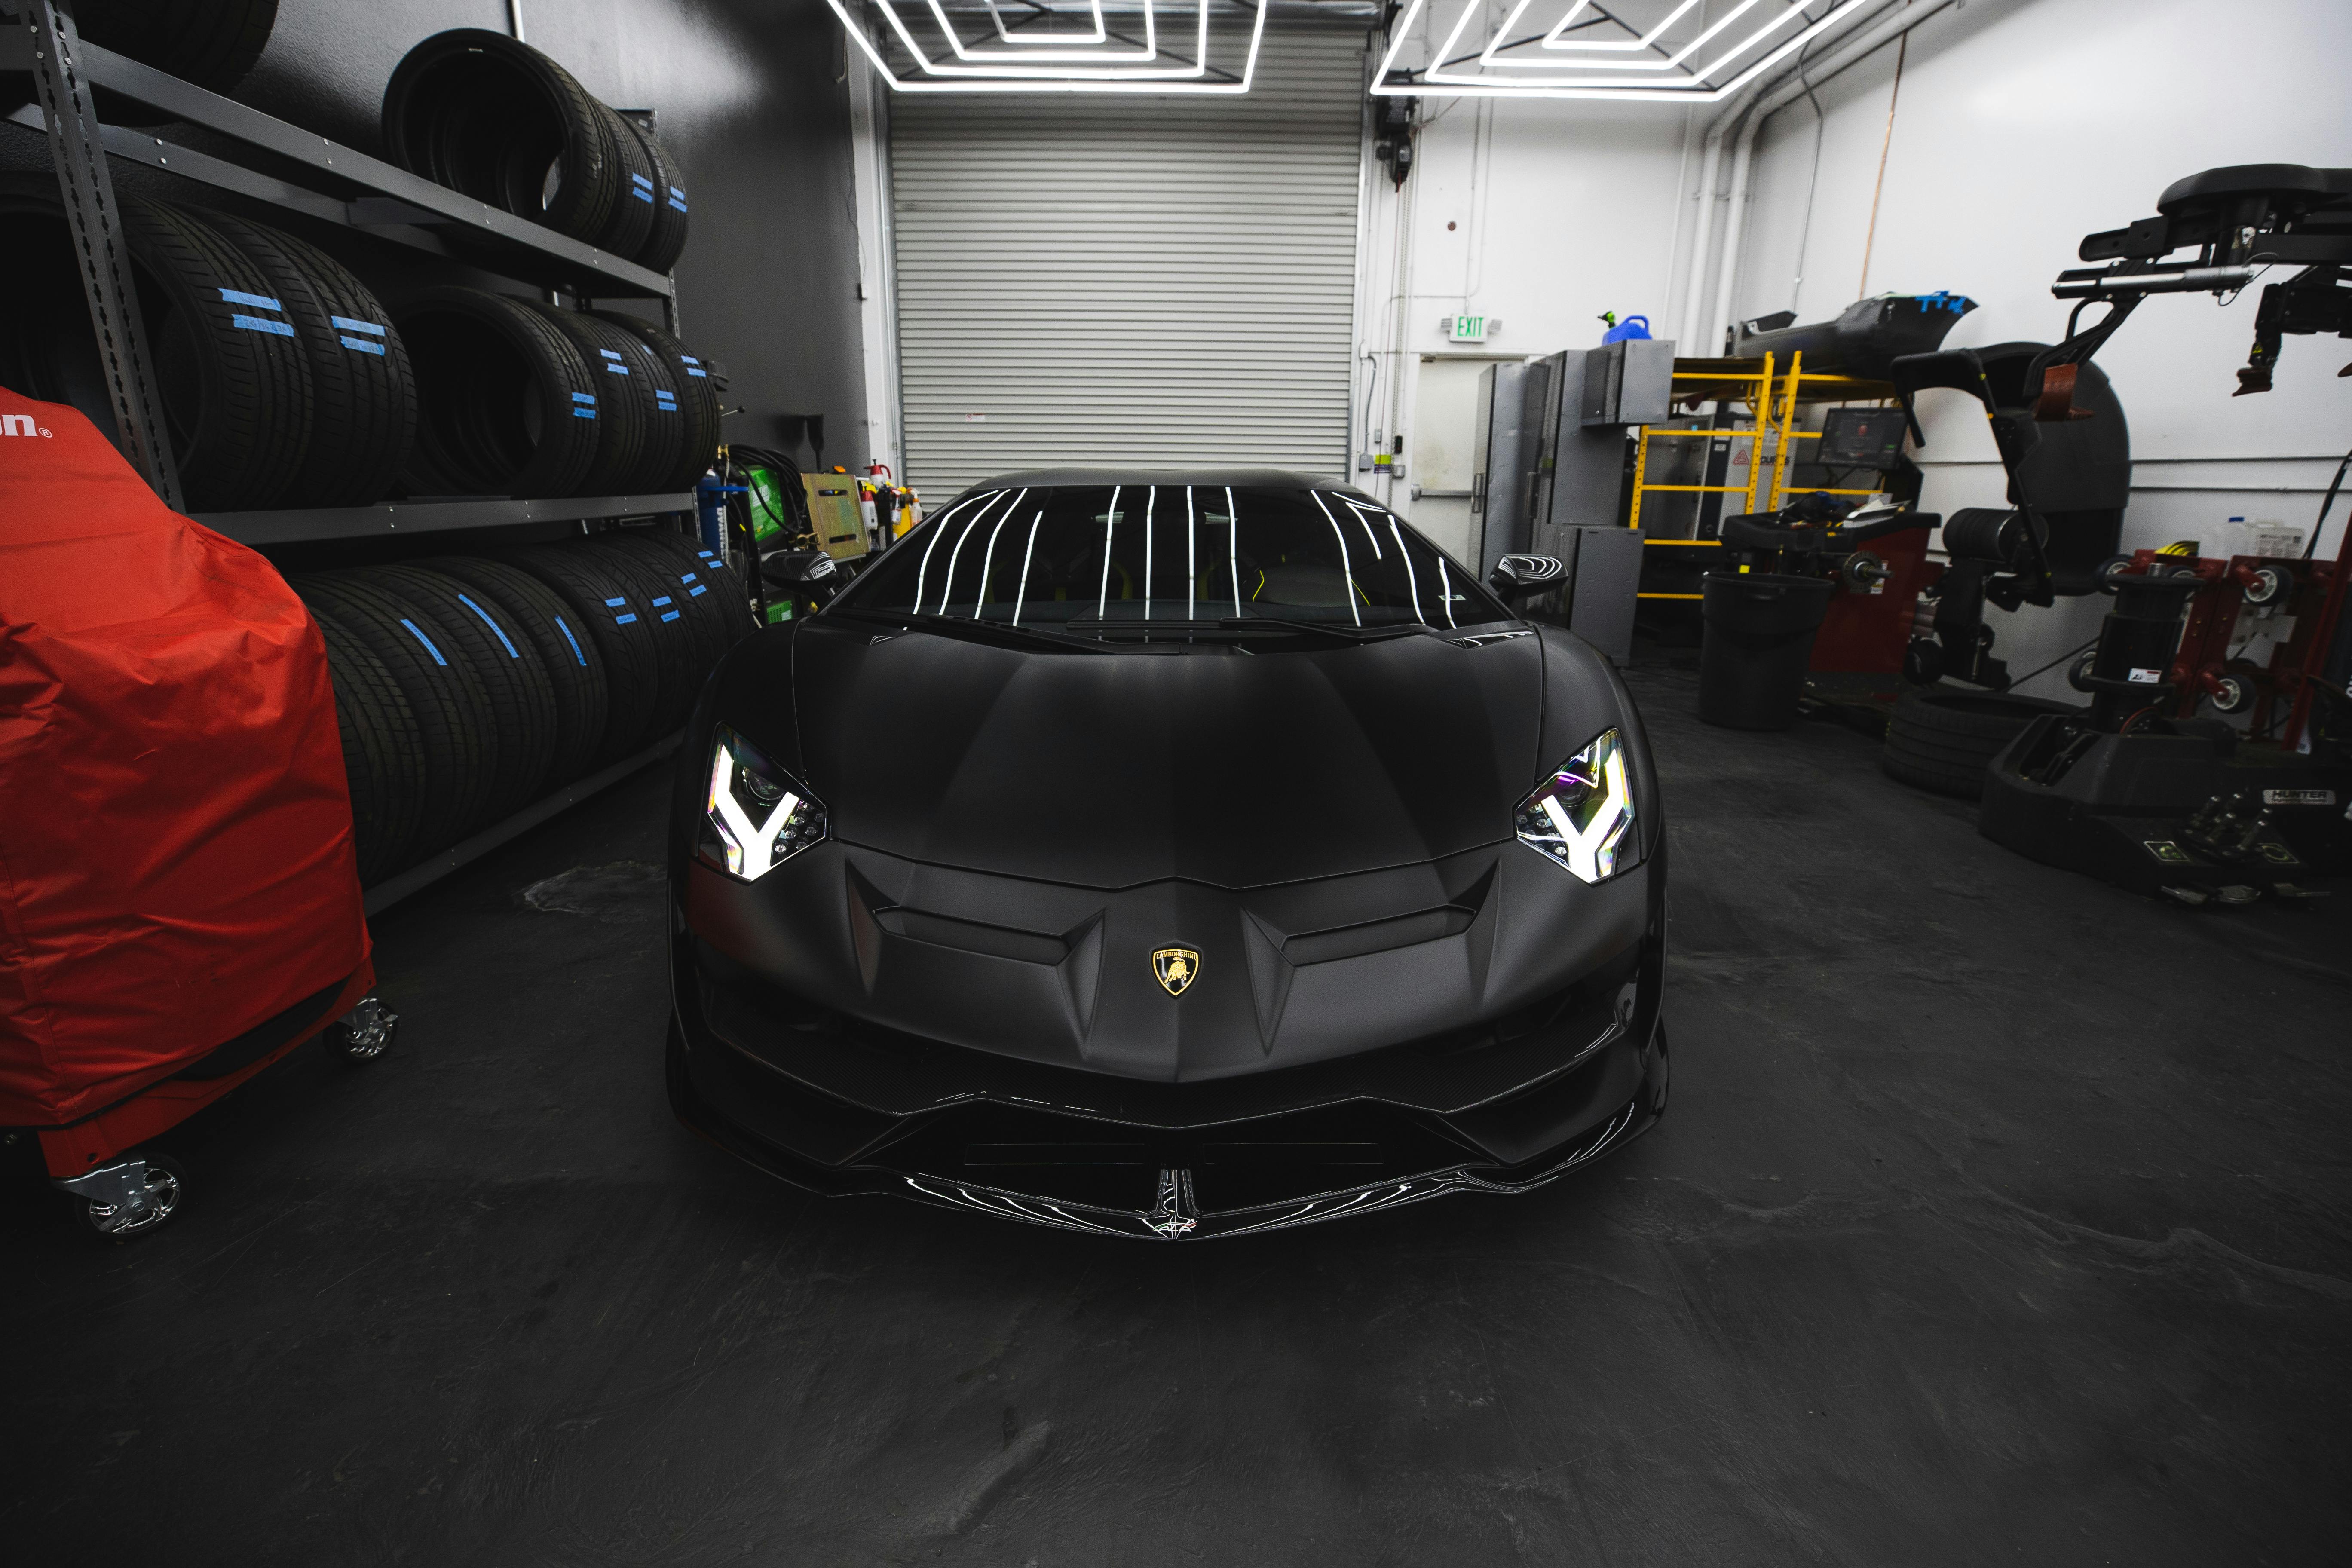 Black Sports Car Parked Inside a Garage · Free Stock Photo